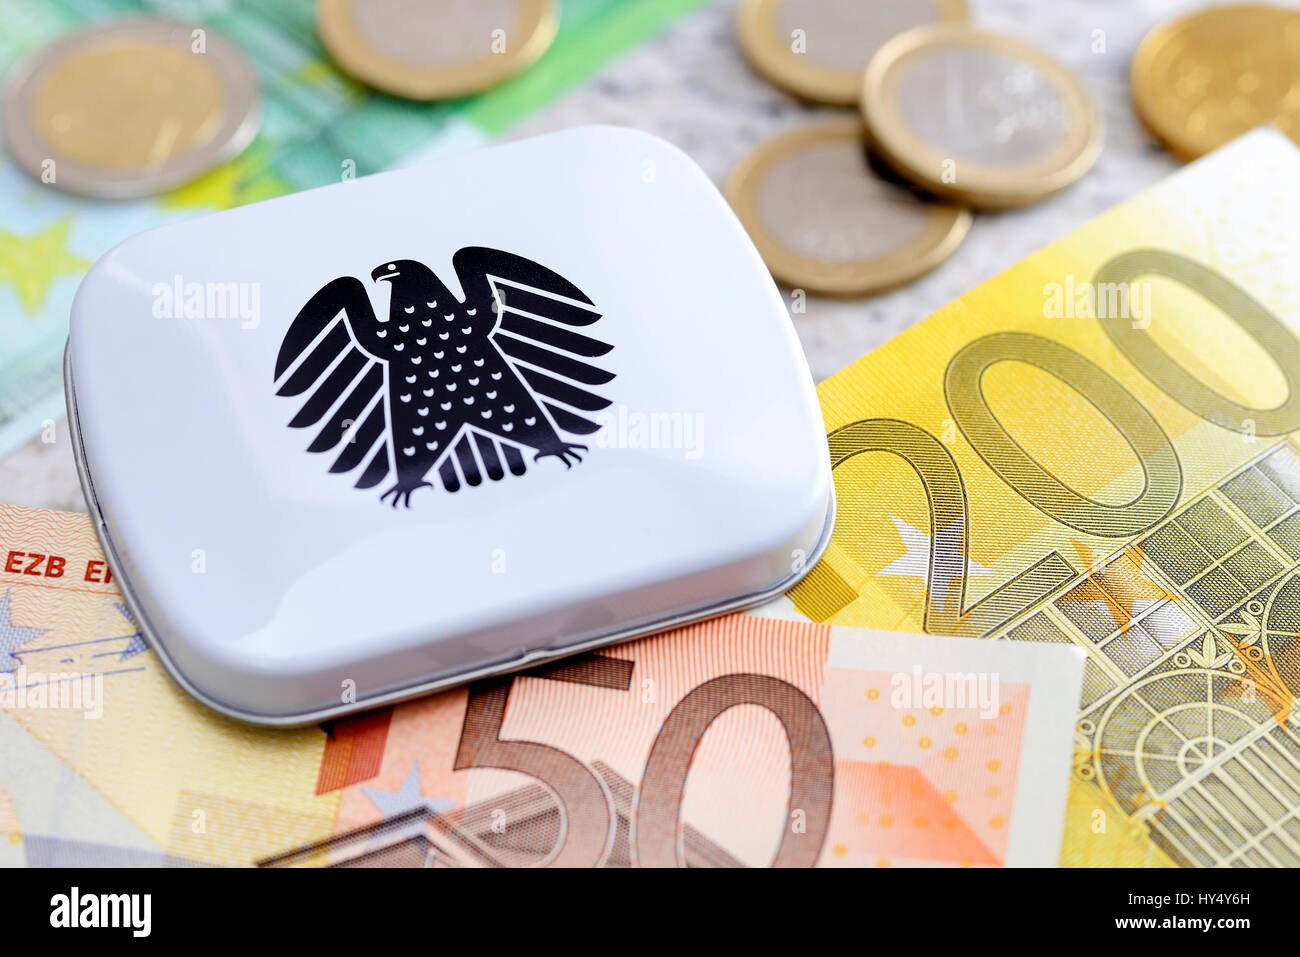 Tin with federal eagle and bank notes, parliamentary pay rise, Dose mit Bundesadler und Geldscheine, Diaetenerhoehung Stock Photo